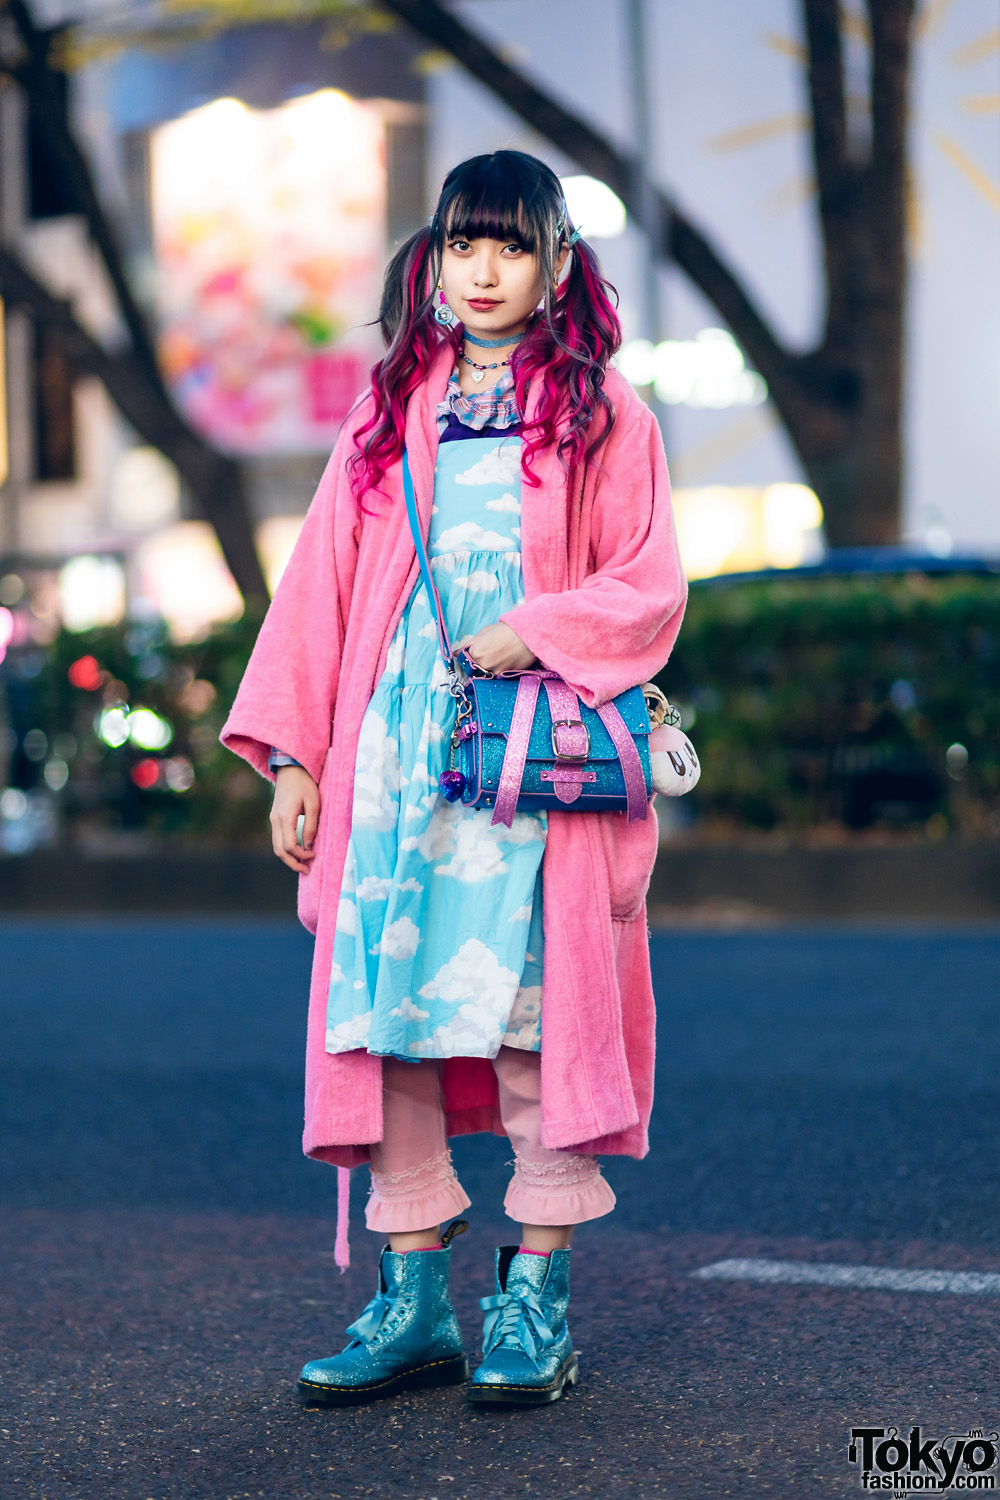 Harajuku Kawaii Street Style w/ Twin Tails, Yves Saint Laurent Robe, Cloud Print Dress, Teenstyle, Glem, Candy Stripper Bow Bag & Dr. Martens Glitter Boots